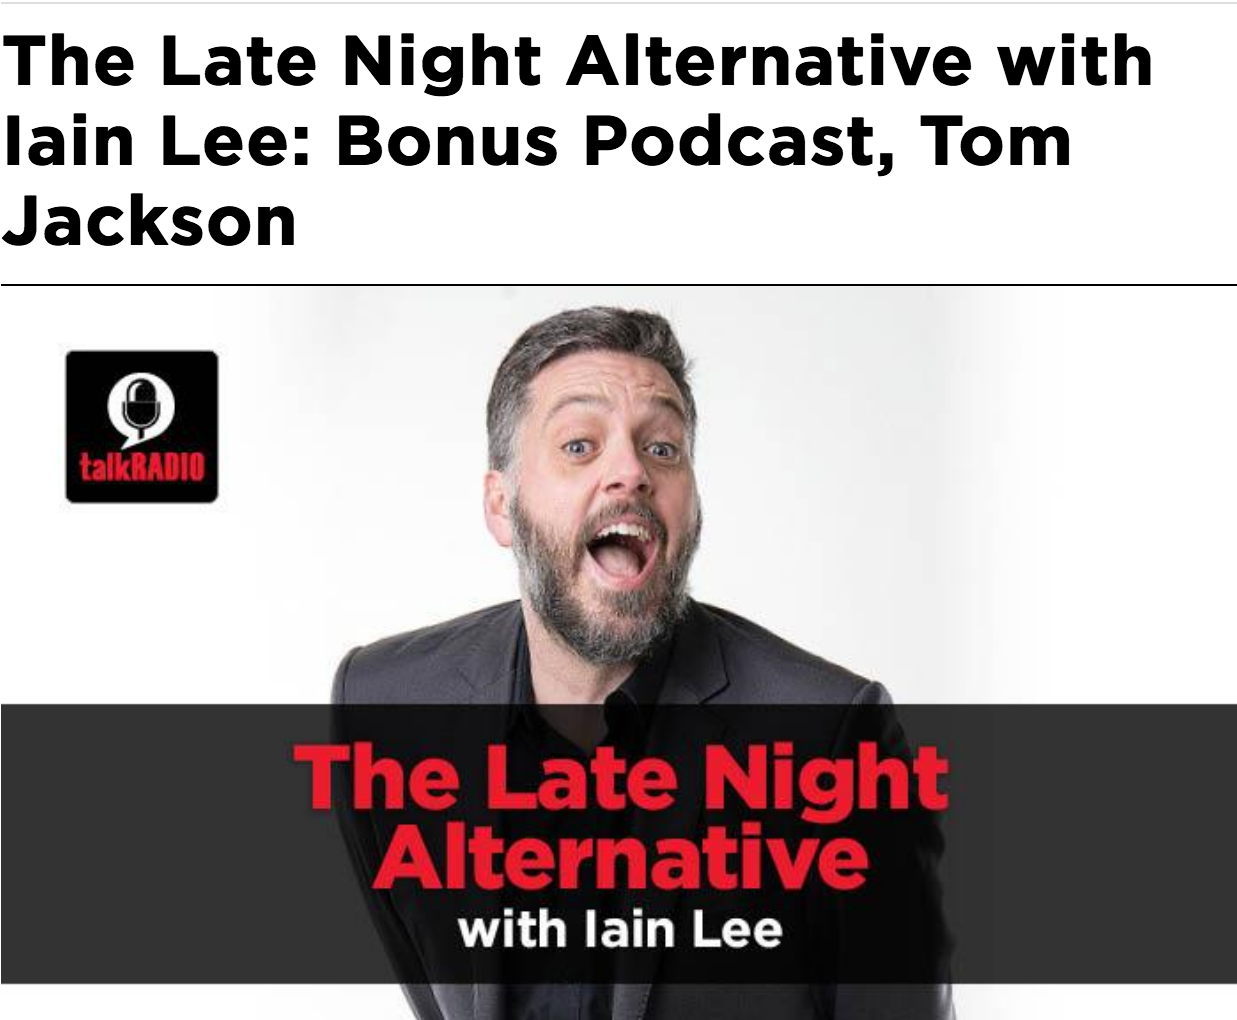 http://talkradio.co.uk/funny/late-night-alternative-iain-lee-bonus-podcast-tom-jackson-17070415859